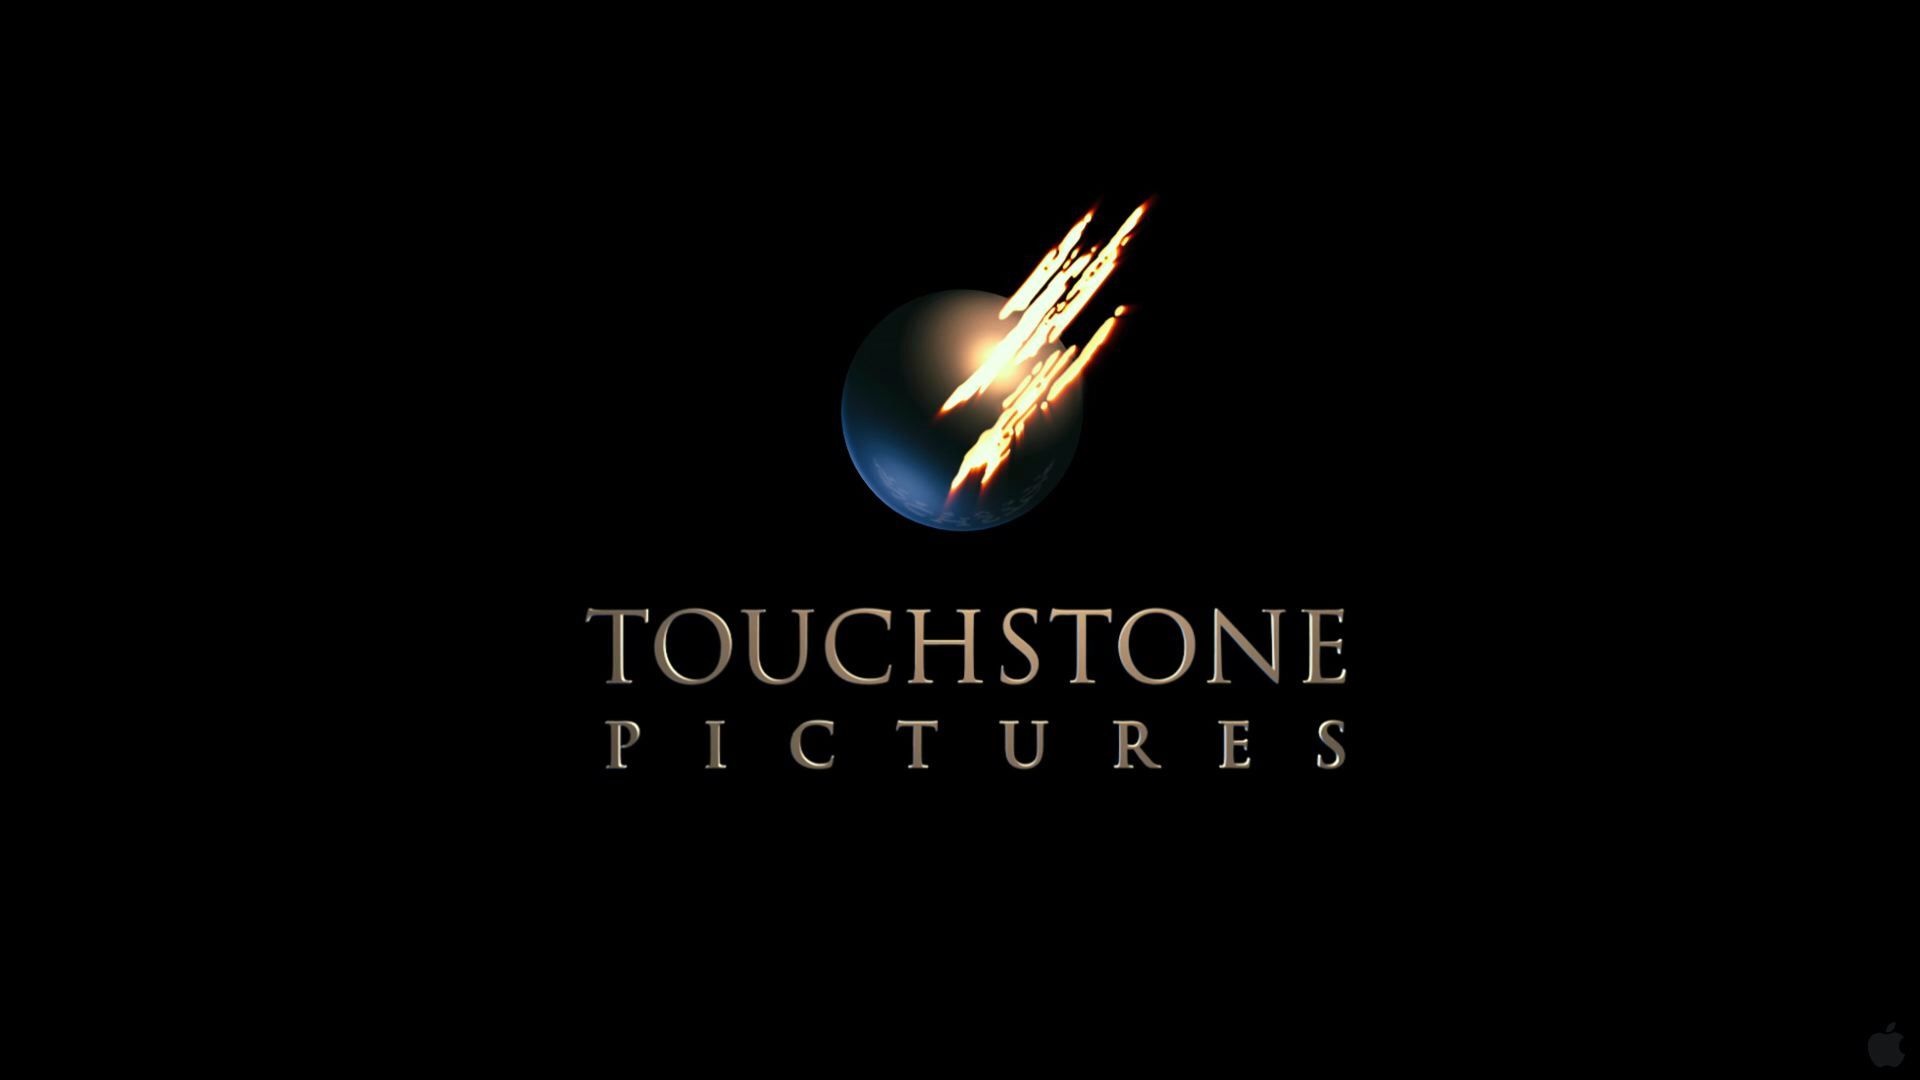 Touchstone Pictures, Studio logo, Picture logo, 1920x1080 Full HD Desktop